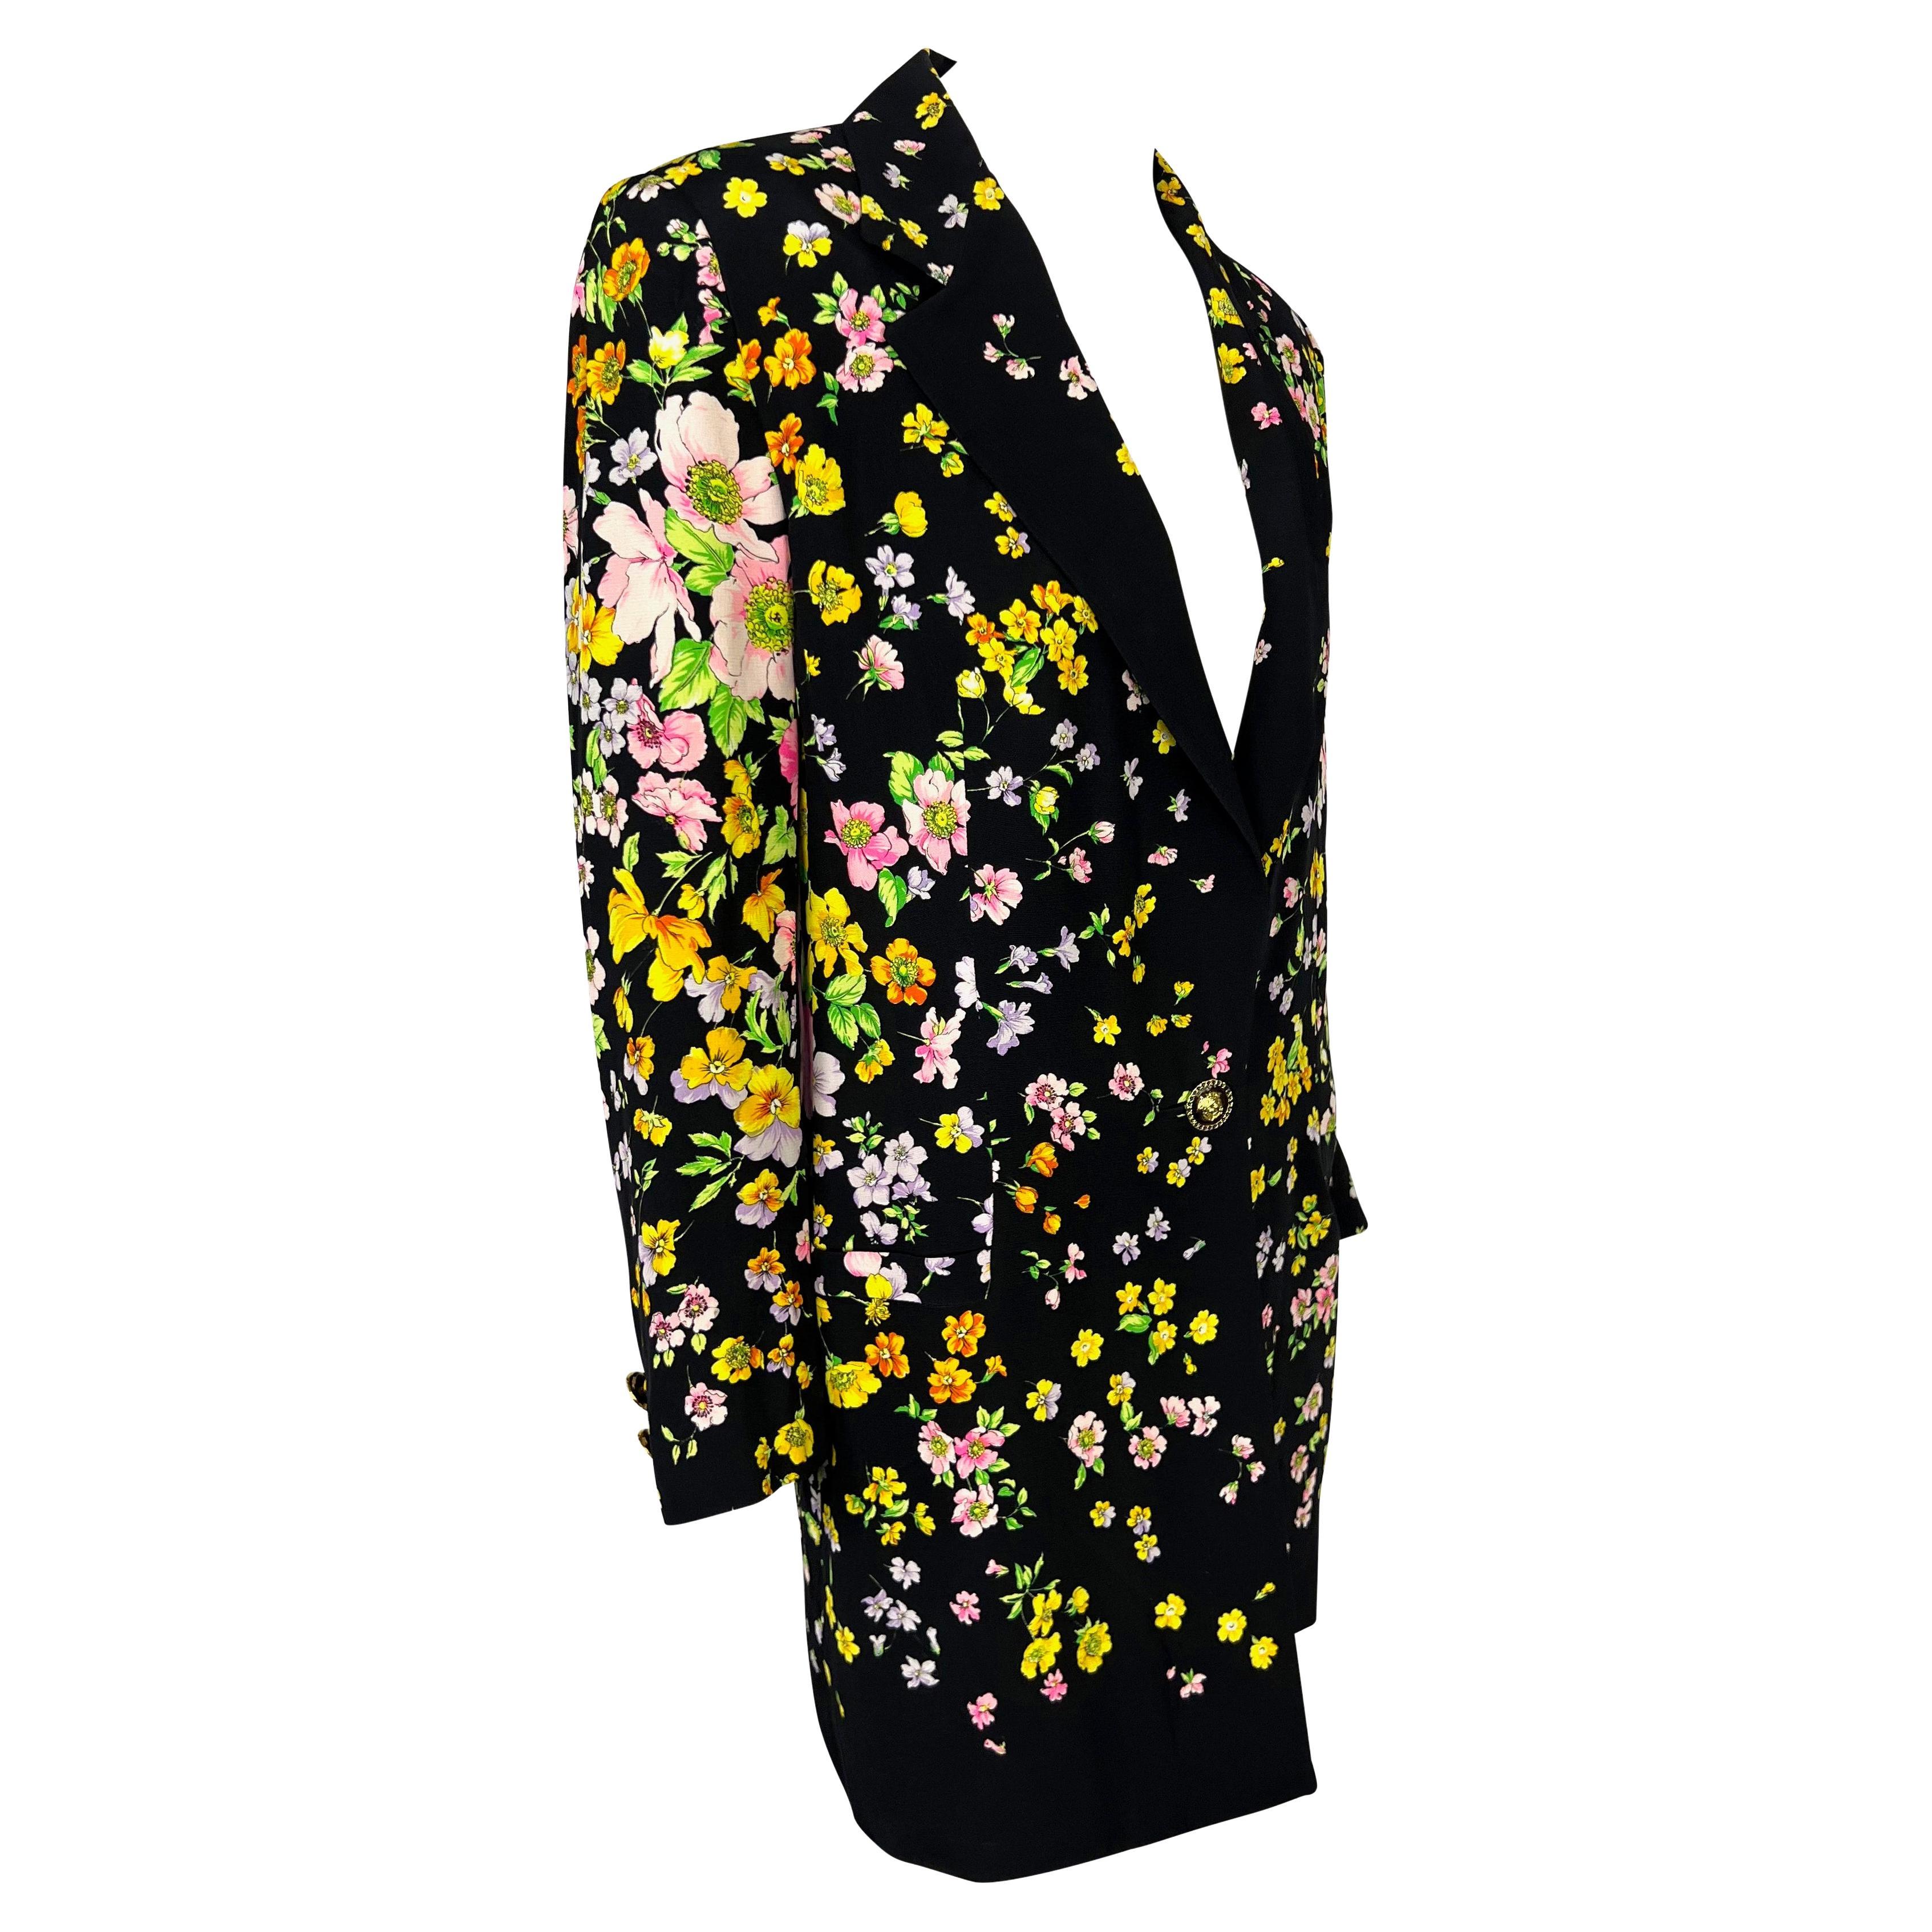 S/S 1993 Gianni Versace Couture Black Floral Print Silk Medusa Blazer Jacket For Sale 1